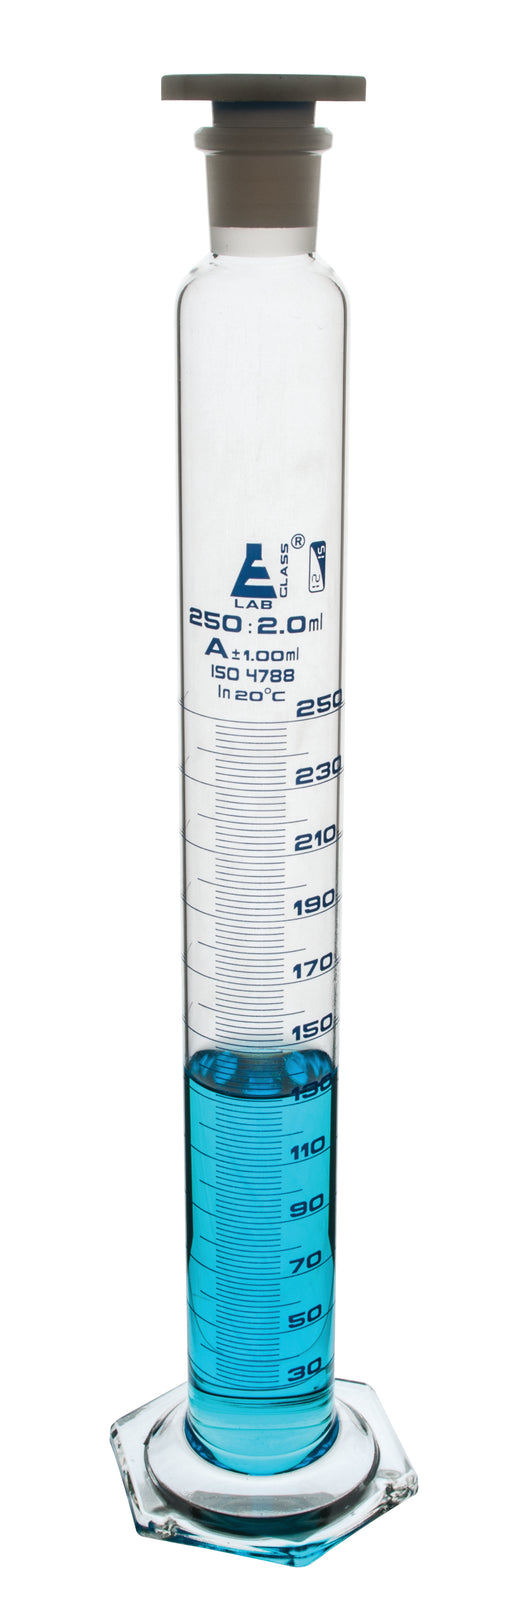 Measuring Cylinder, 250ml - Class A - 24/29 Polypropylene Stopper - Hexagonal Base, Blue Graduations - Borosilicate Glass - Eisco Labs